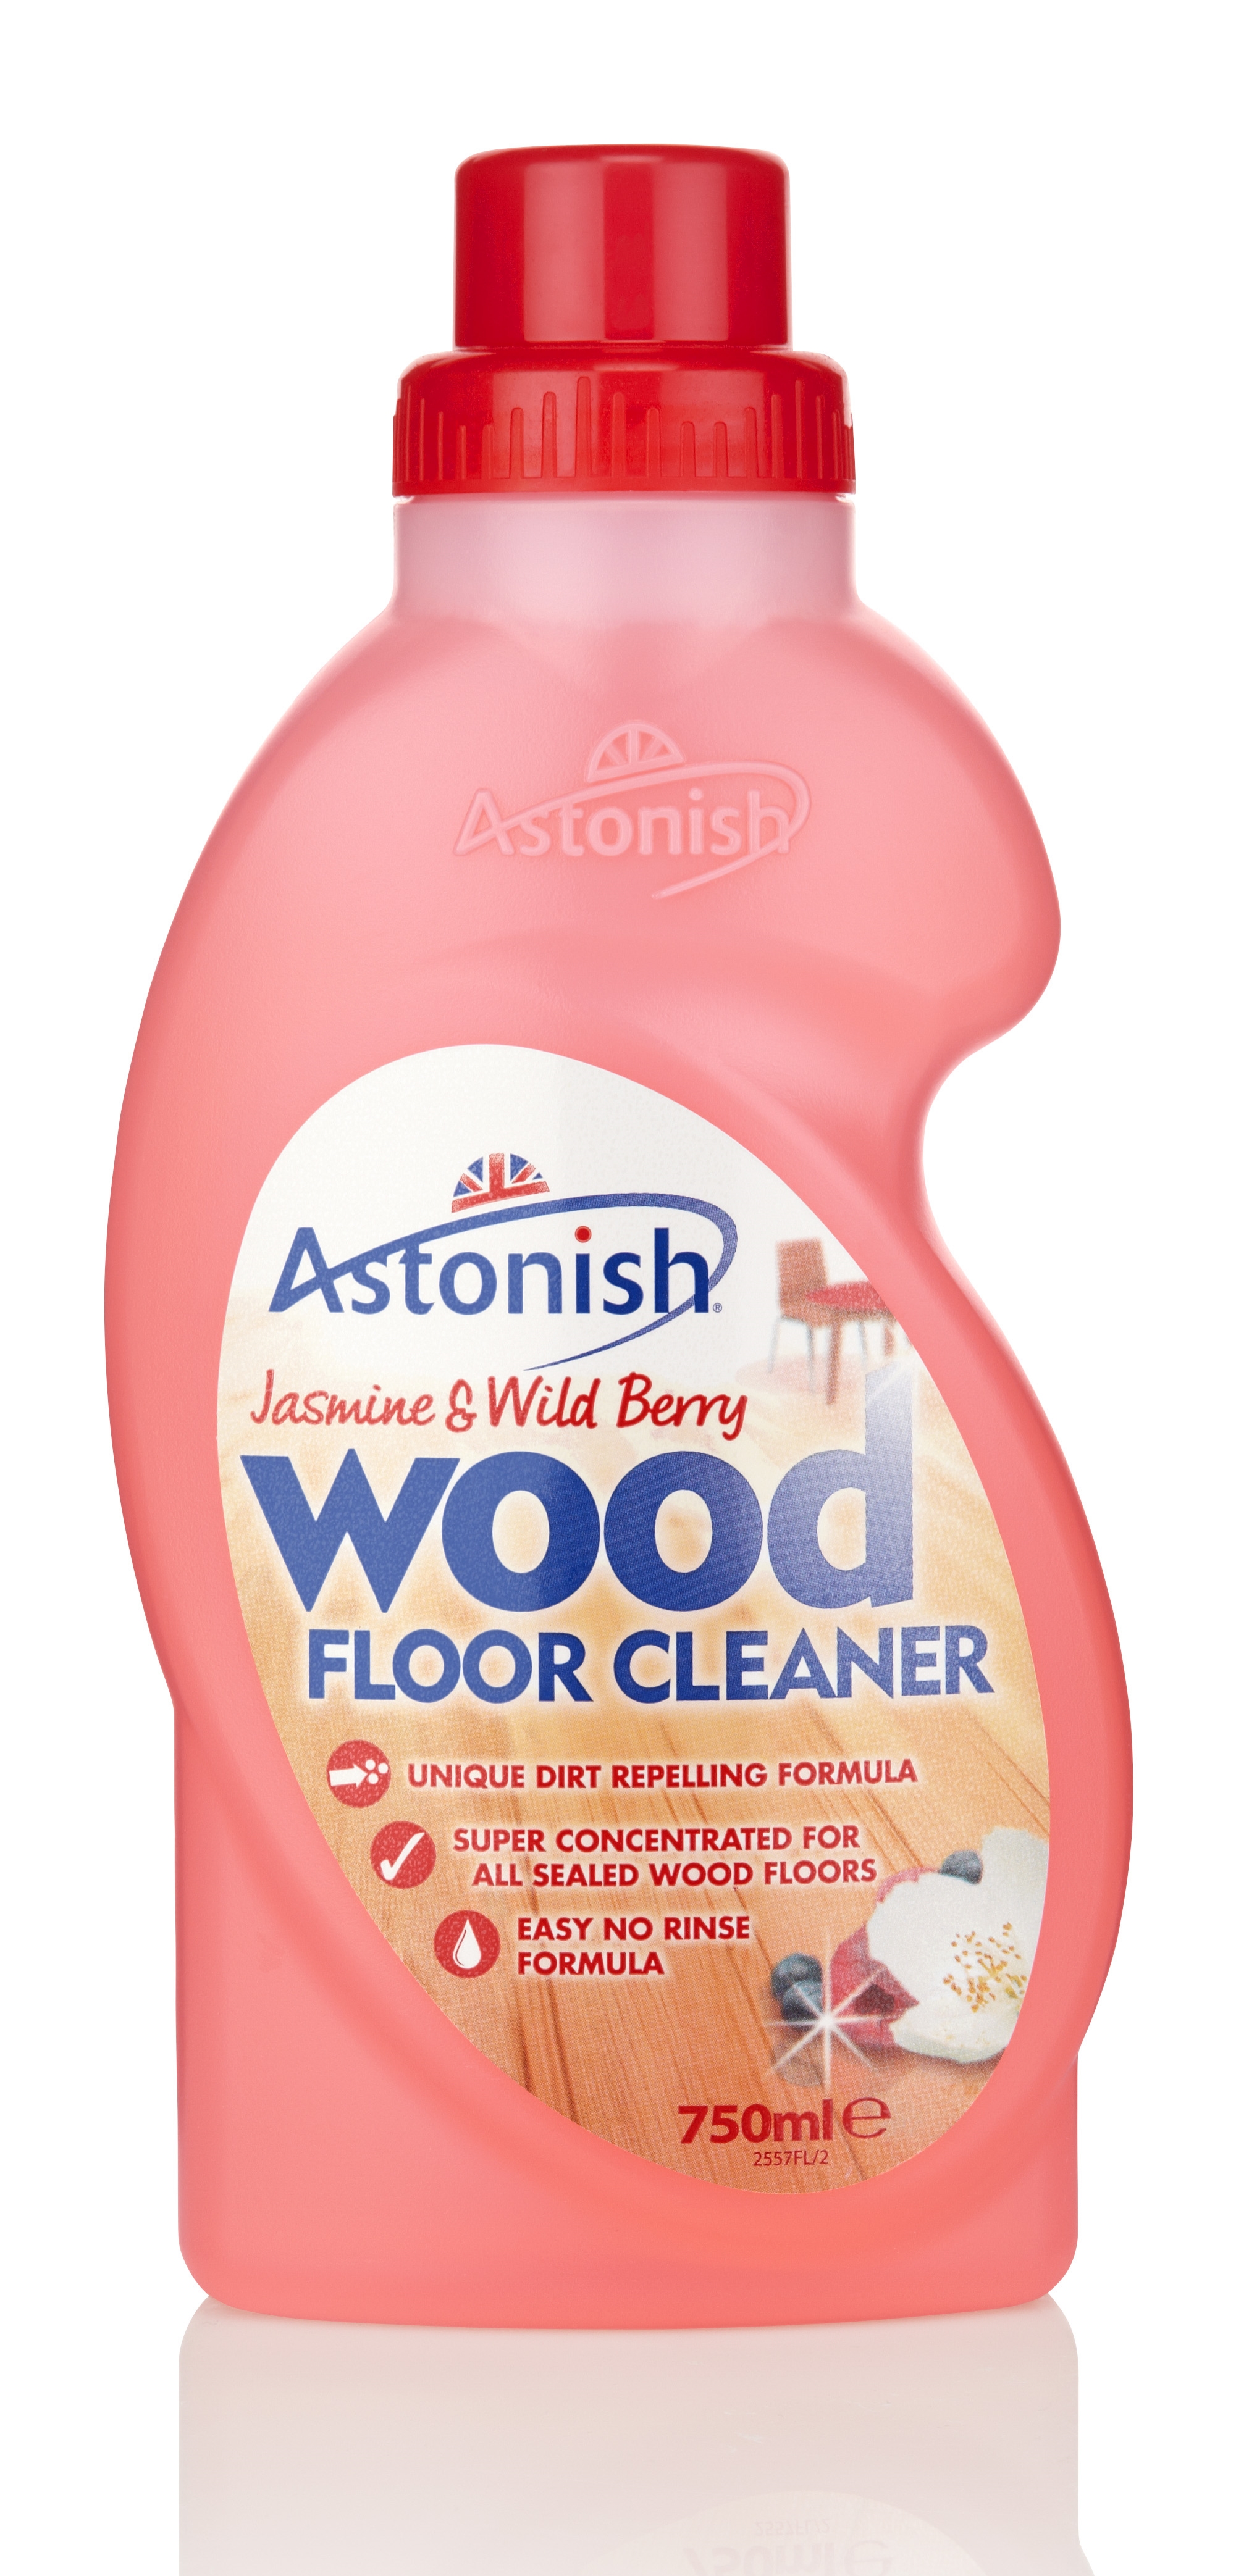 Astonish Wood Floor Cleaner Jasmine & Wild Berry 750ml.jpg